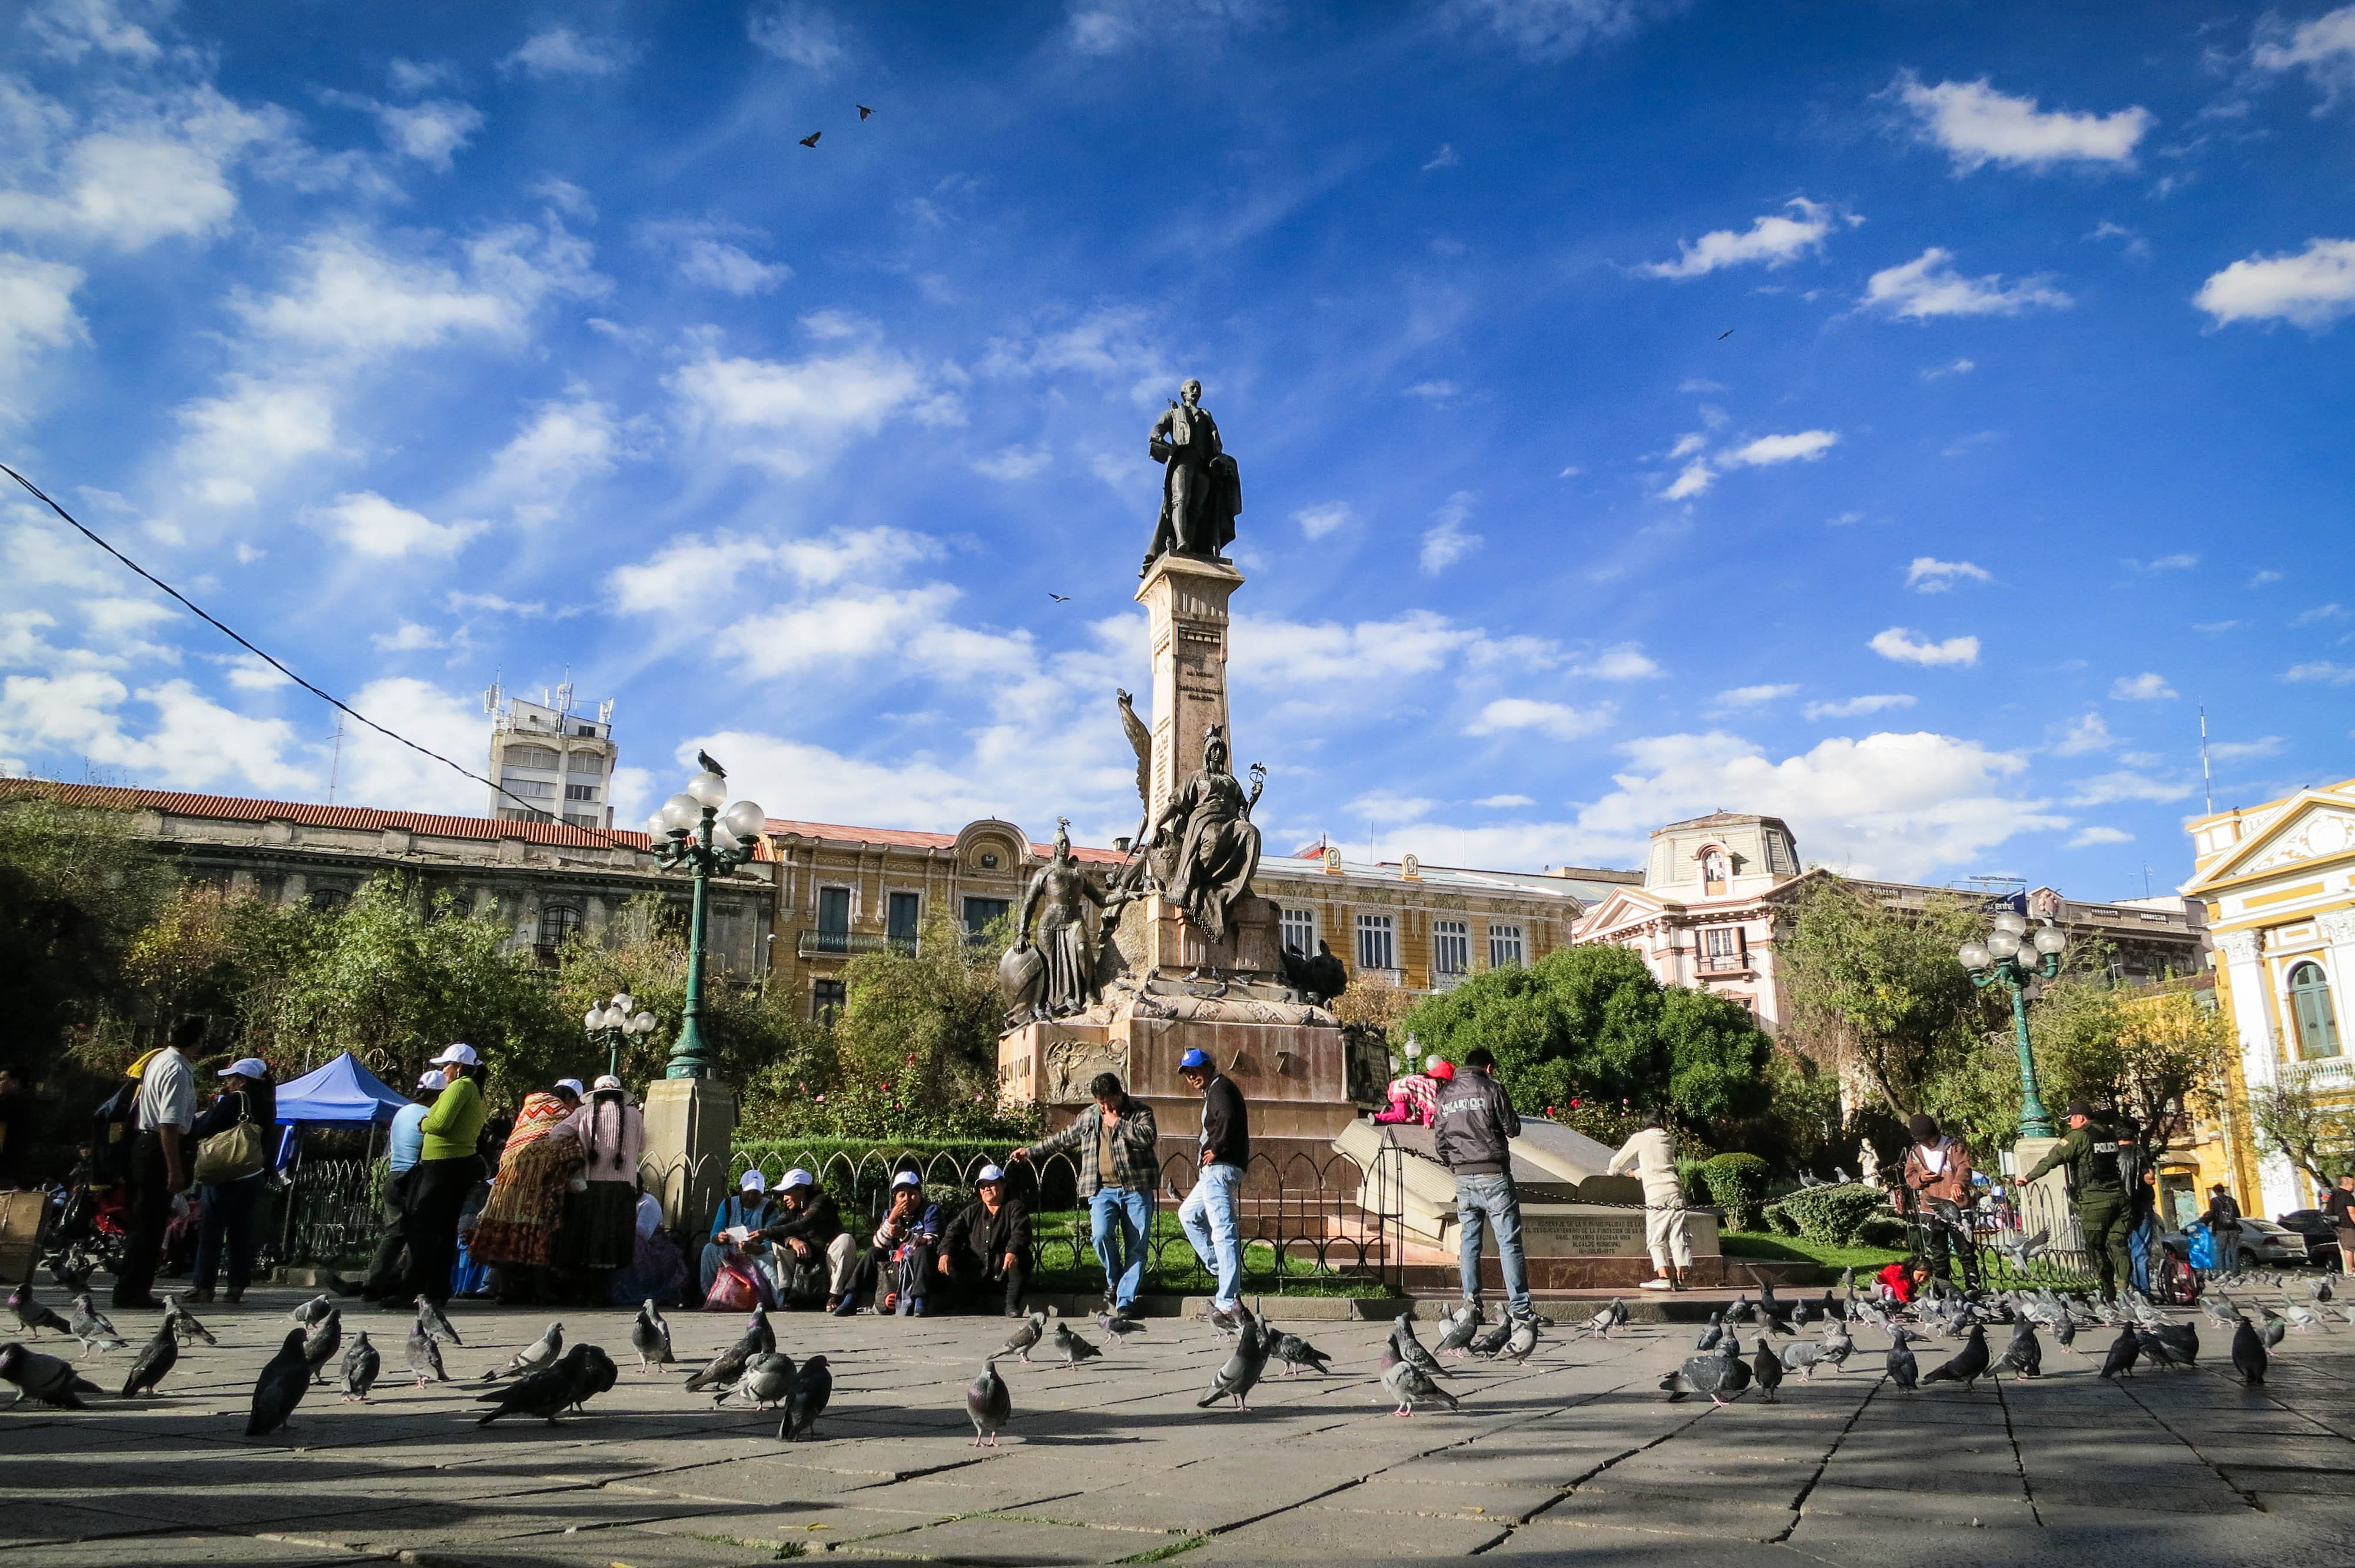 La Paz, Bolivia, landmark, monument, statue, people, pedestrians